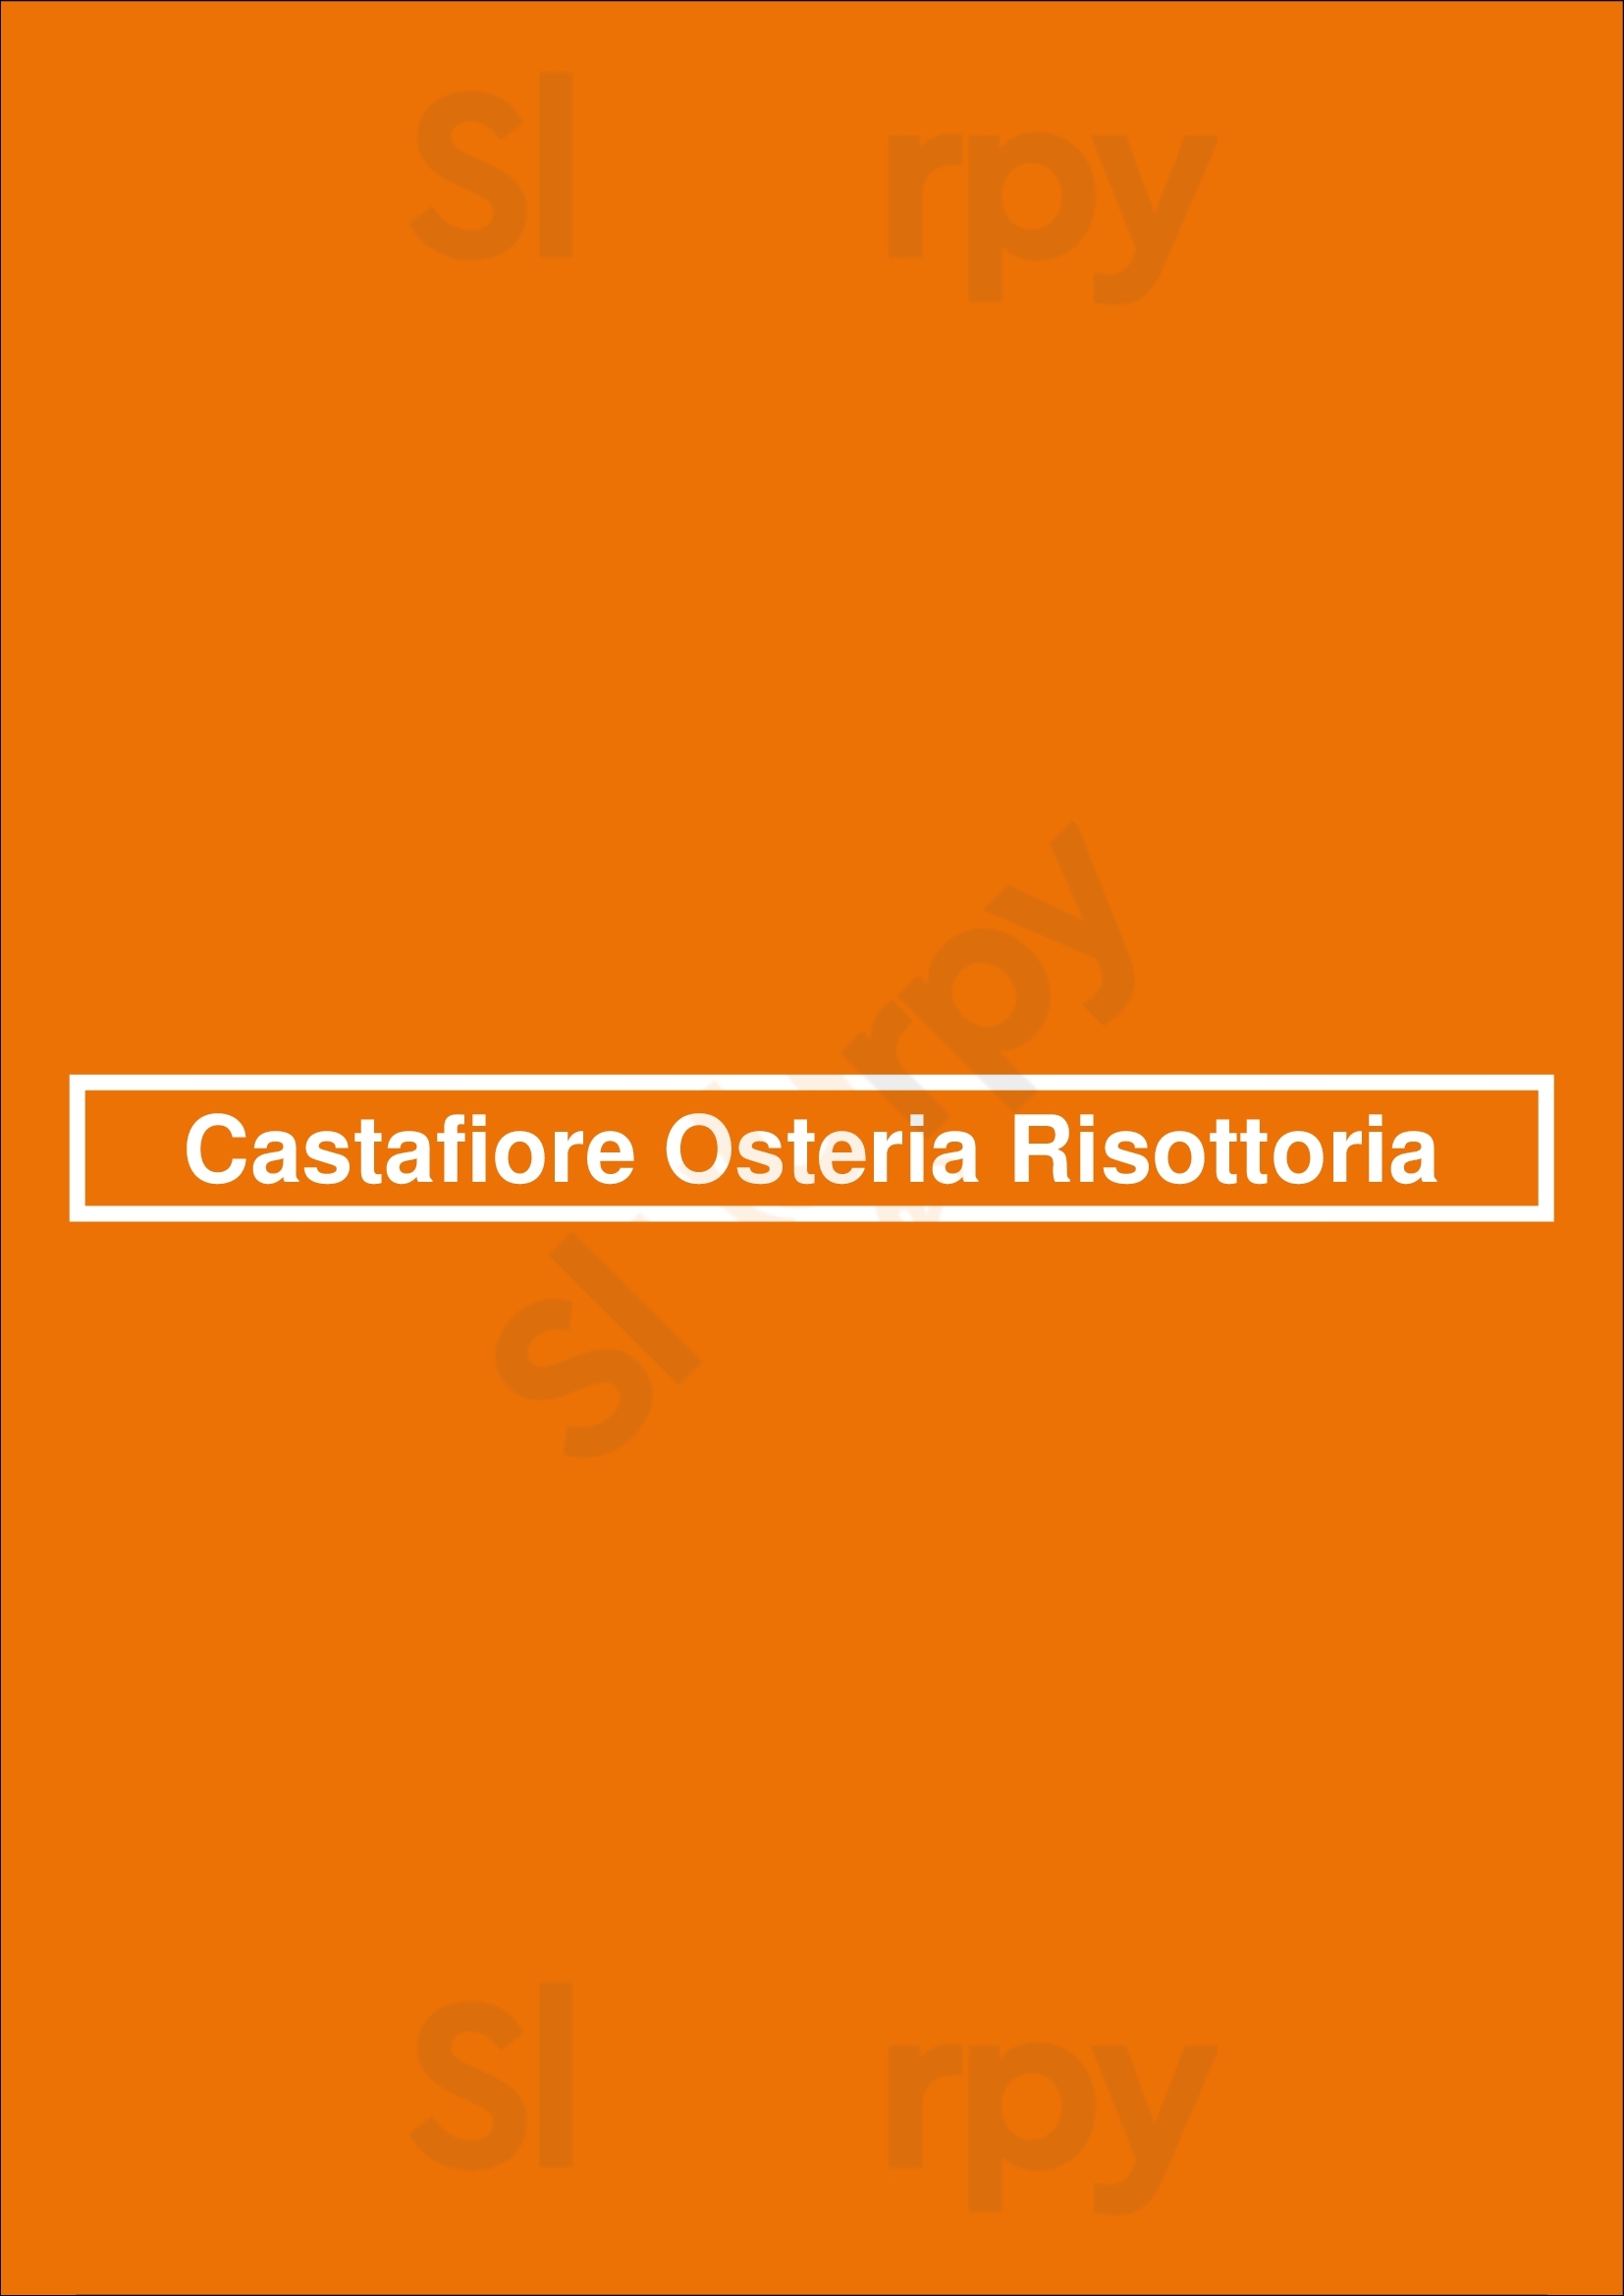 Castafiore Osteria Risottoria Vlissingen Menu - 1